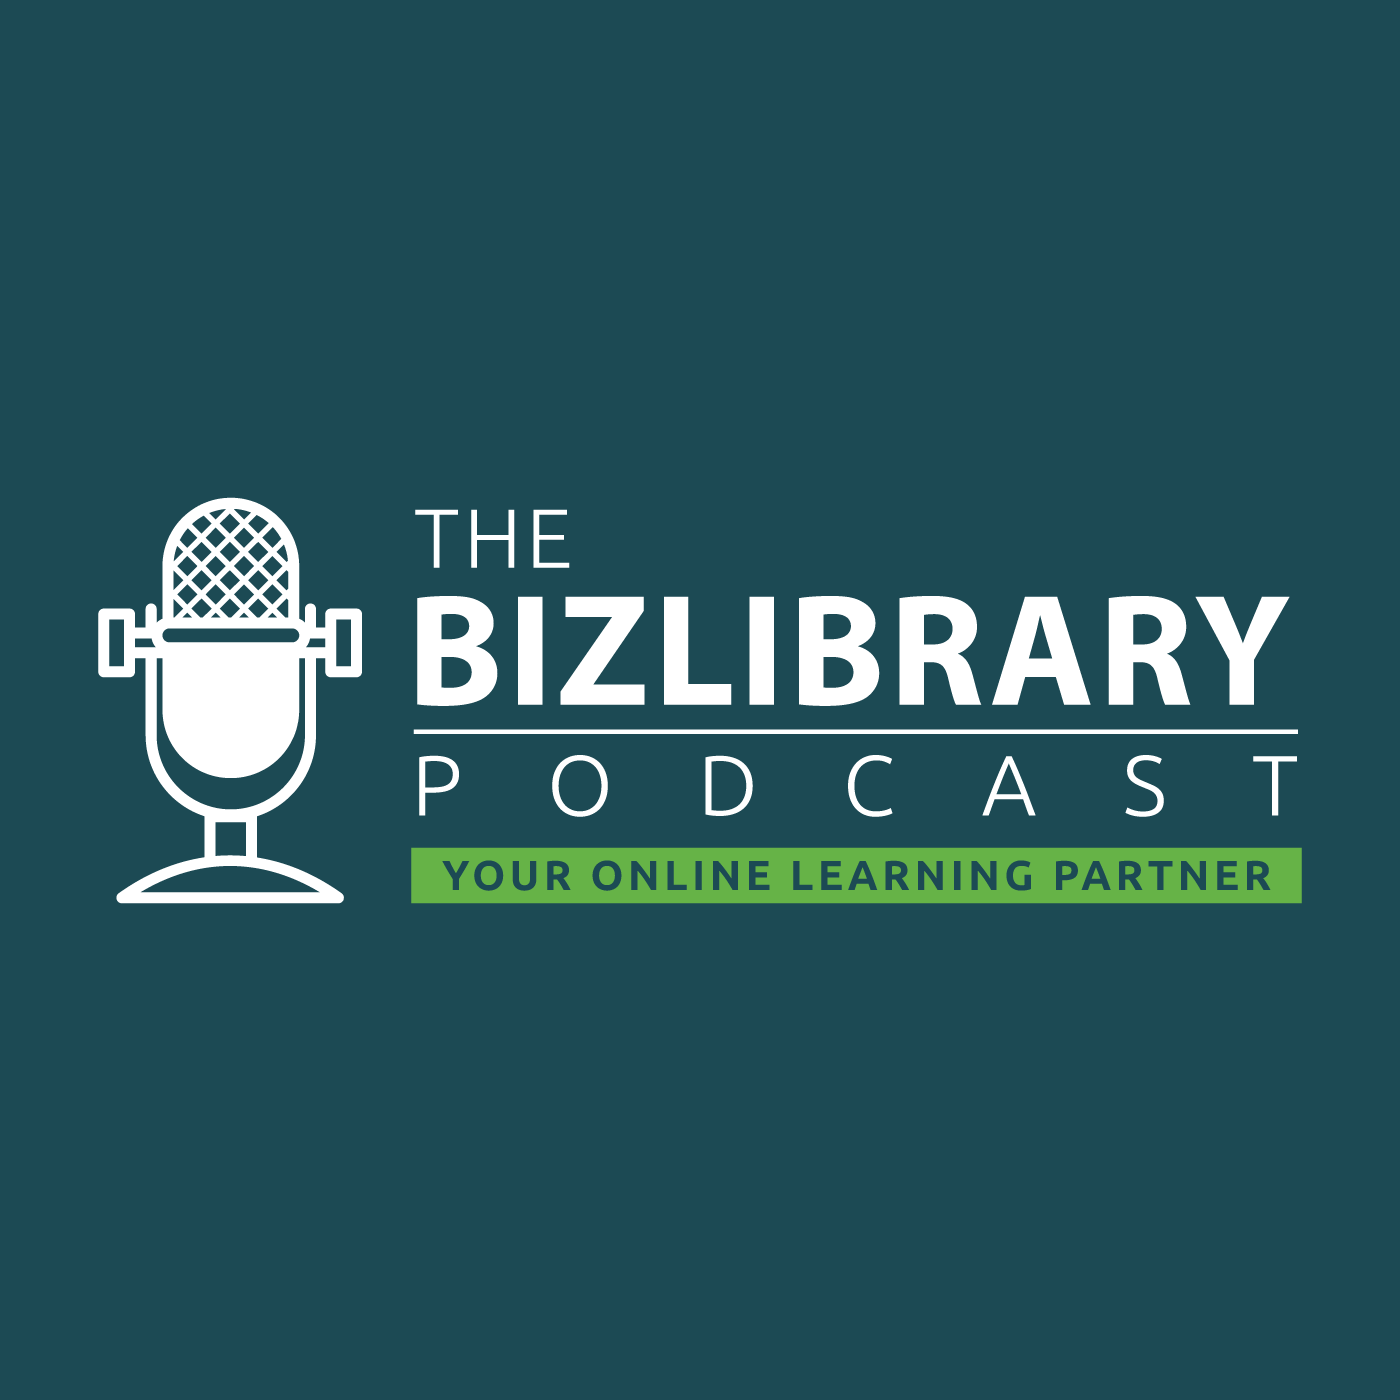 The BizLibrary podcast